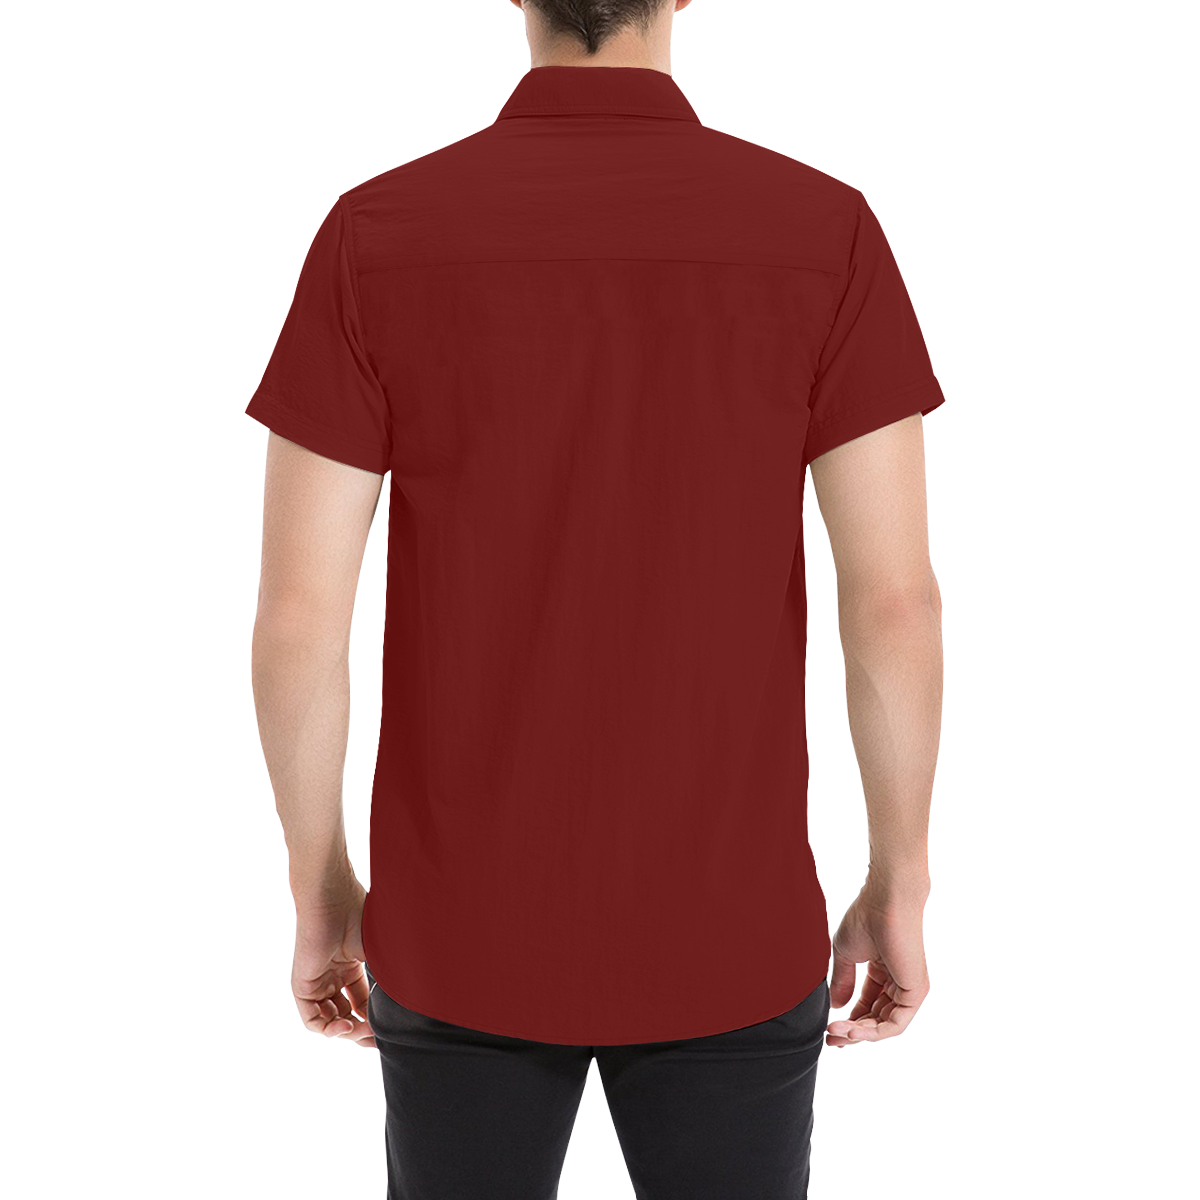 color blood red Men's All Over Print Short Sleeve Shirt (Model T53)